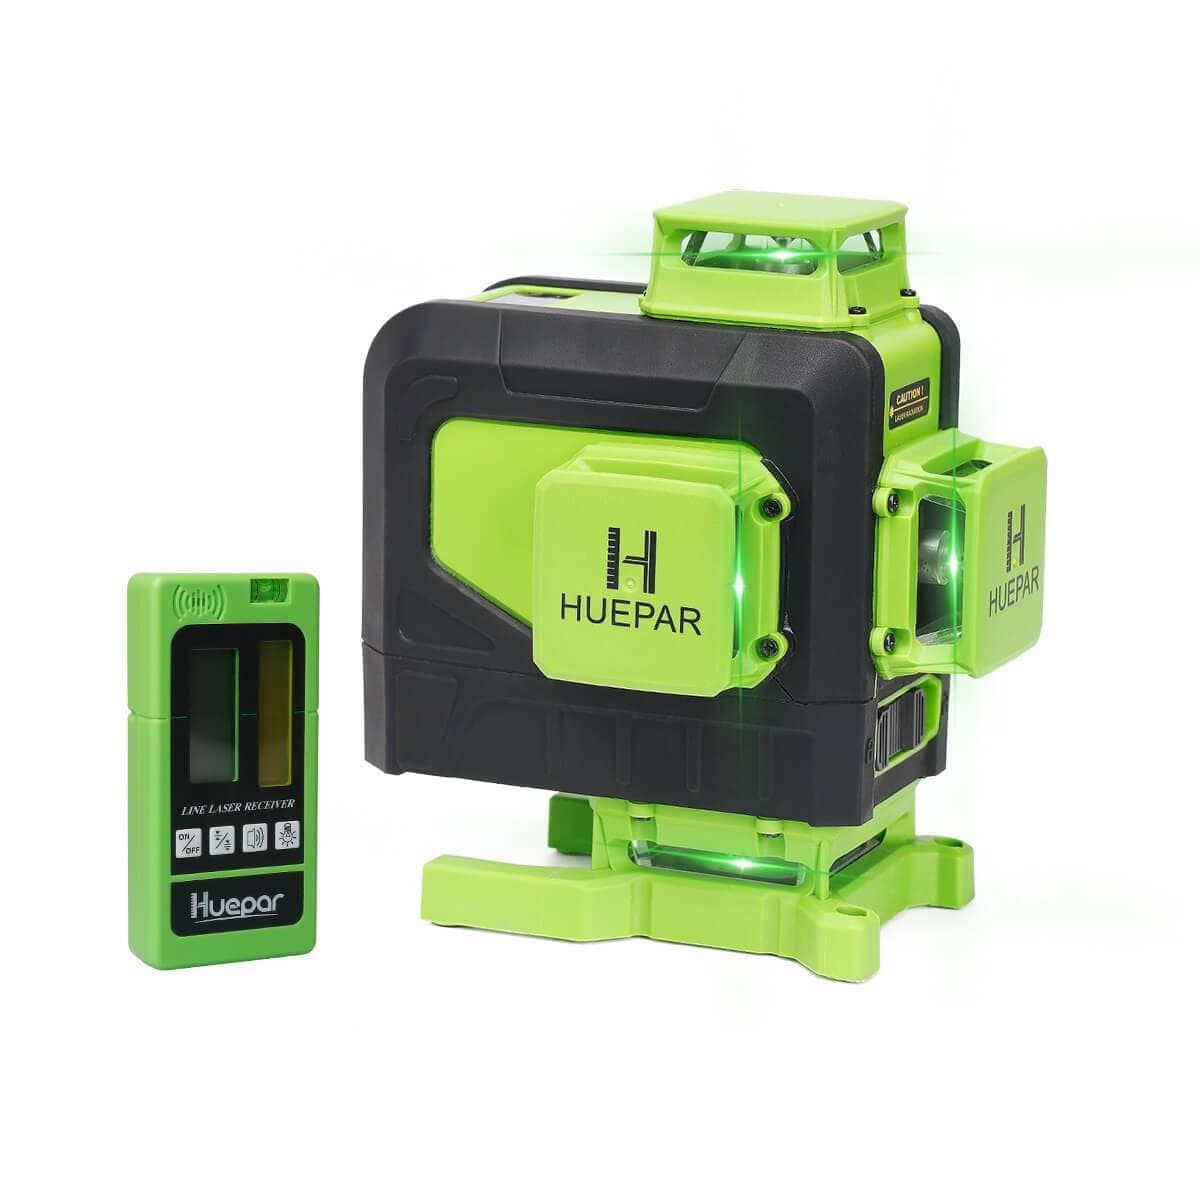 Huepar 904DG - 4x360° Green Cross Line Floor Laser Tool with Remote Control & magnetic Bracket - HUEPAR US